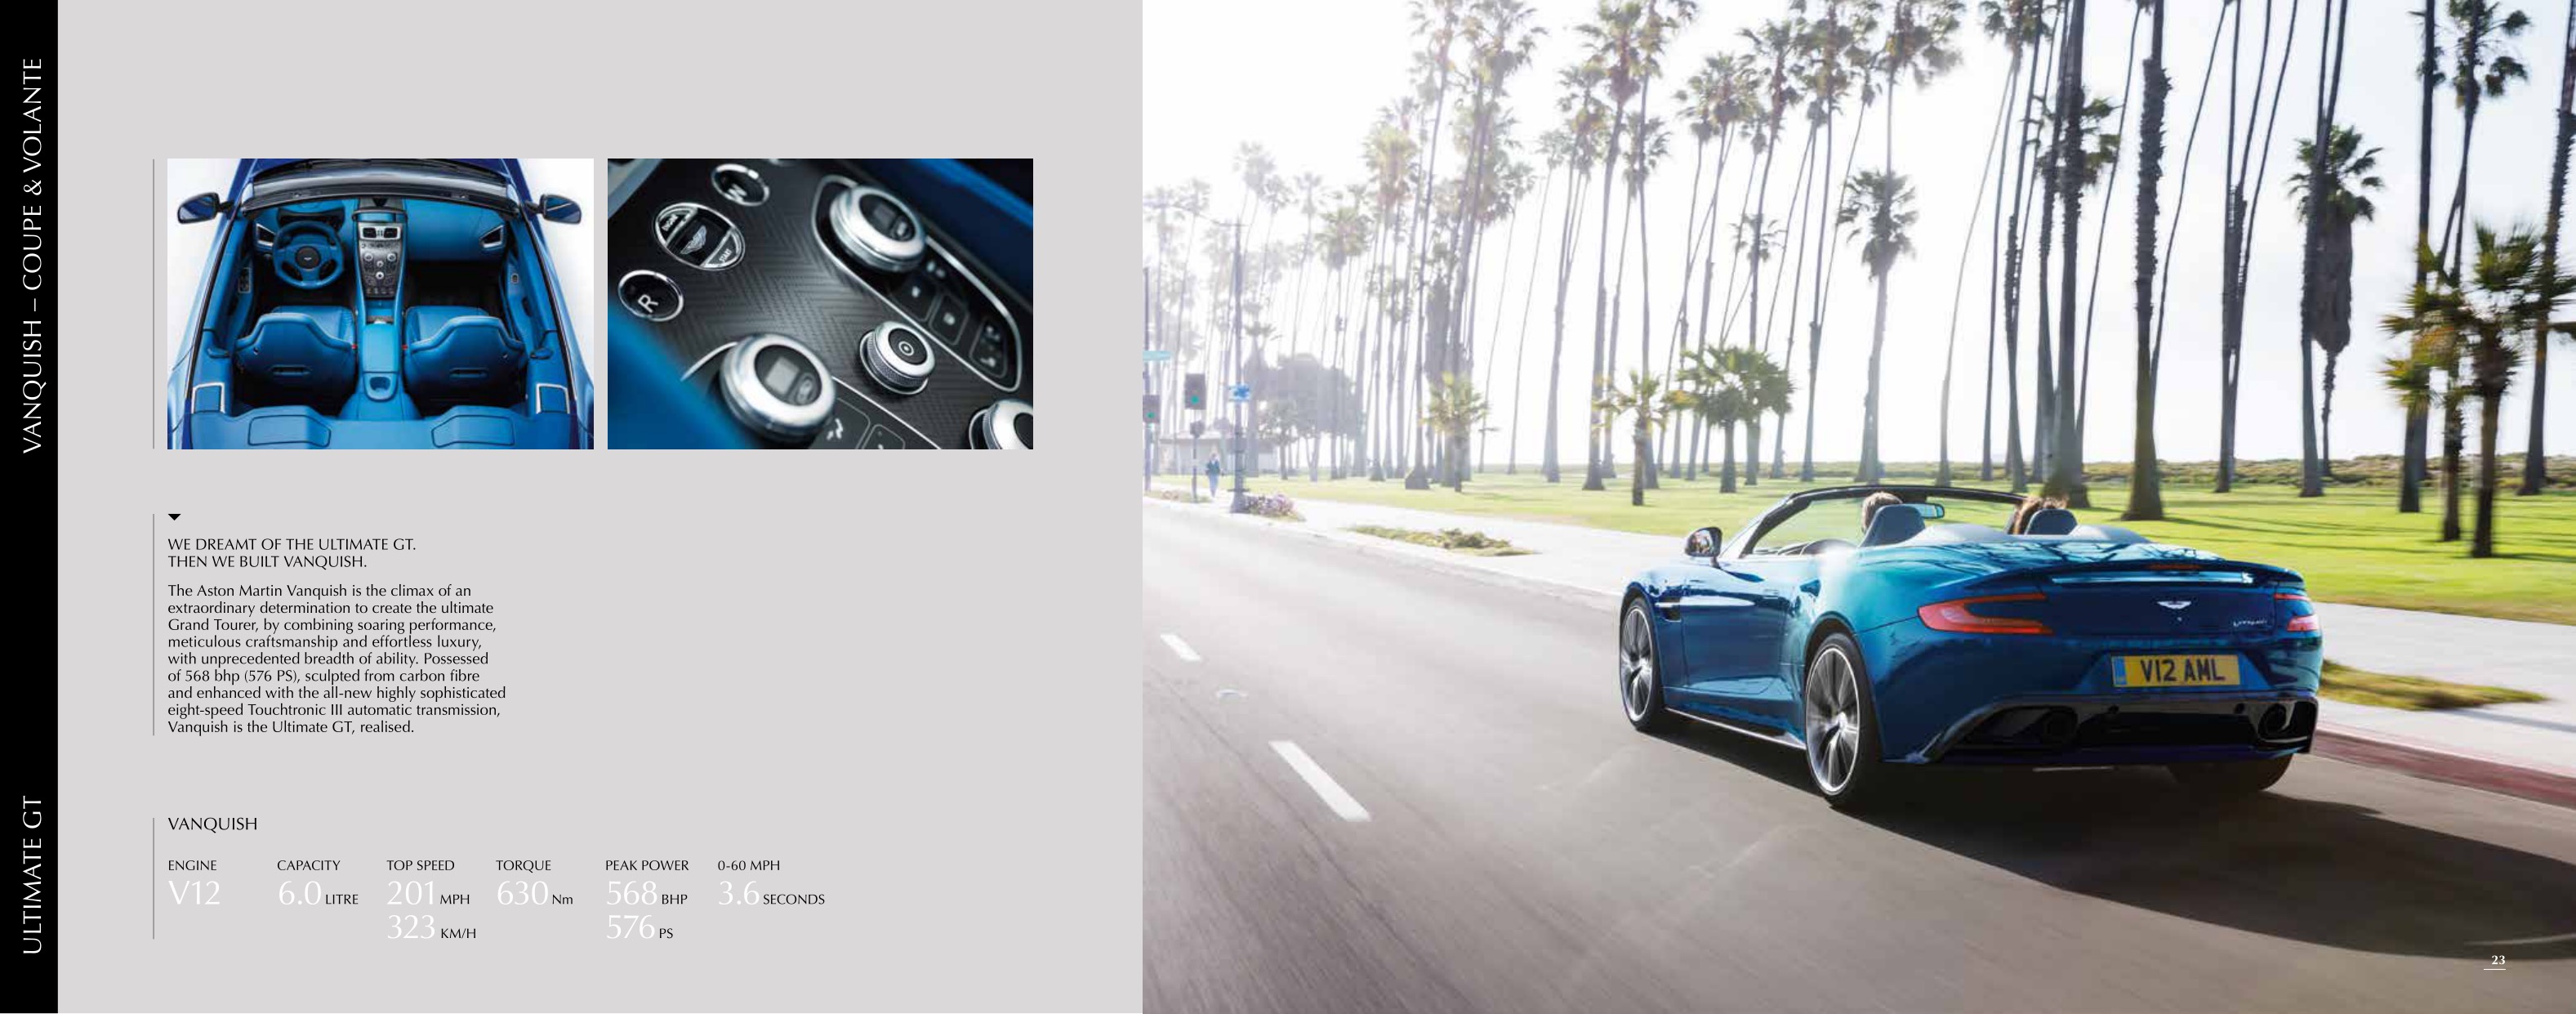 2016 Aston Martin Model Range Brochure Page 1